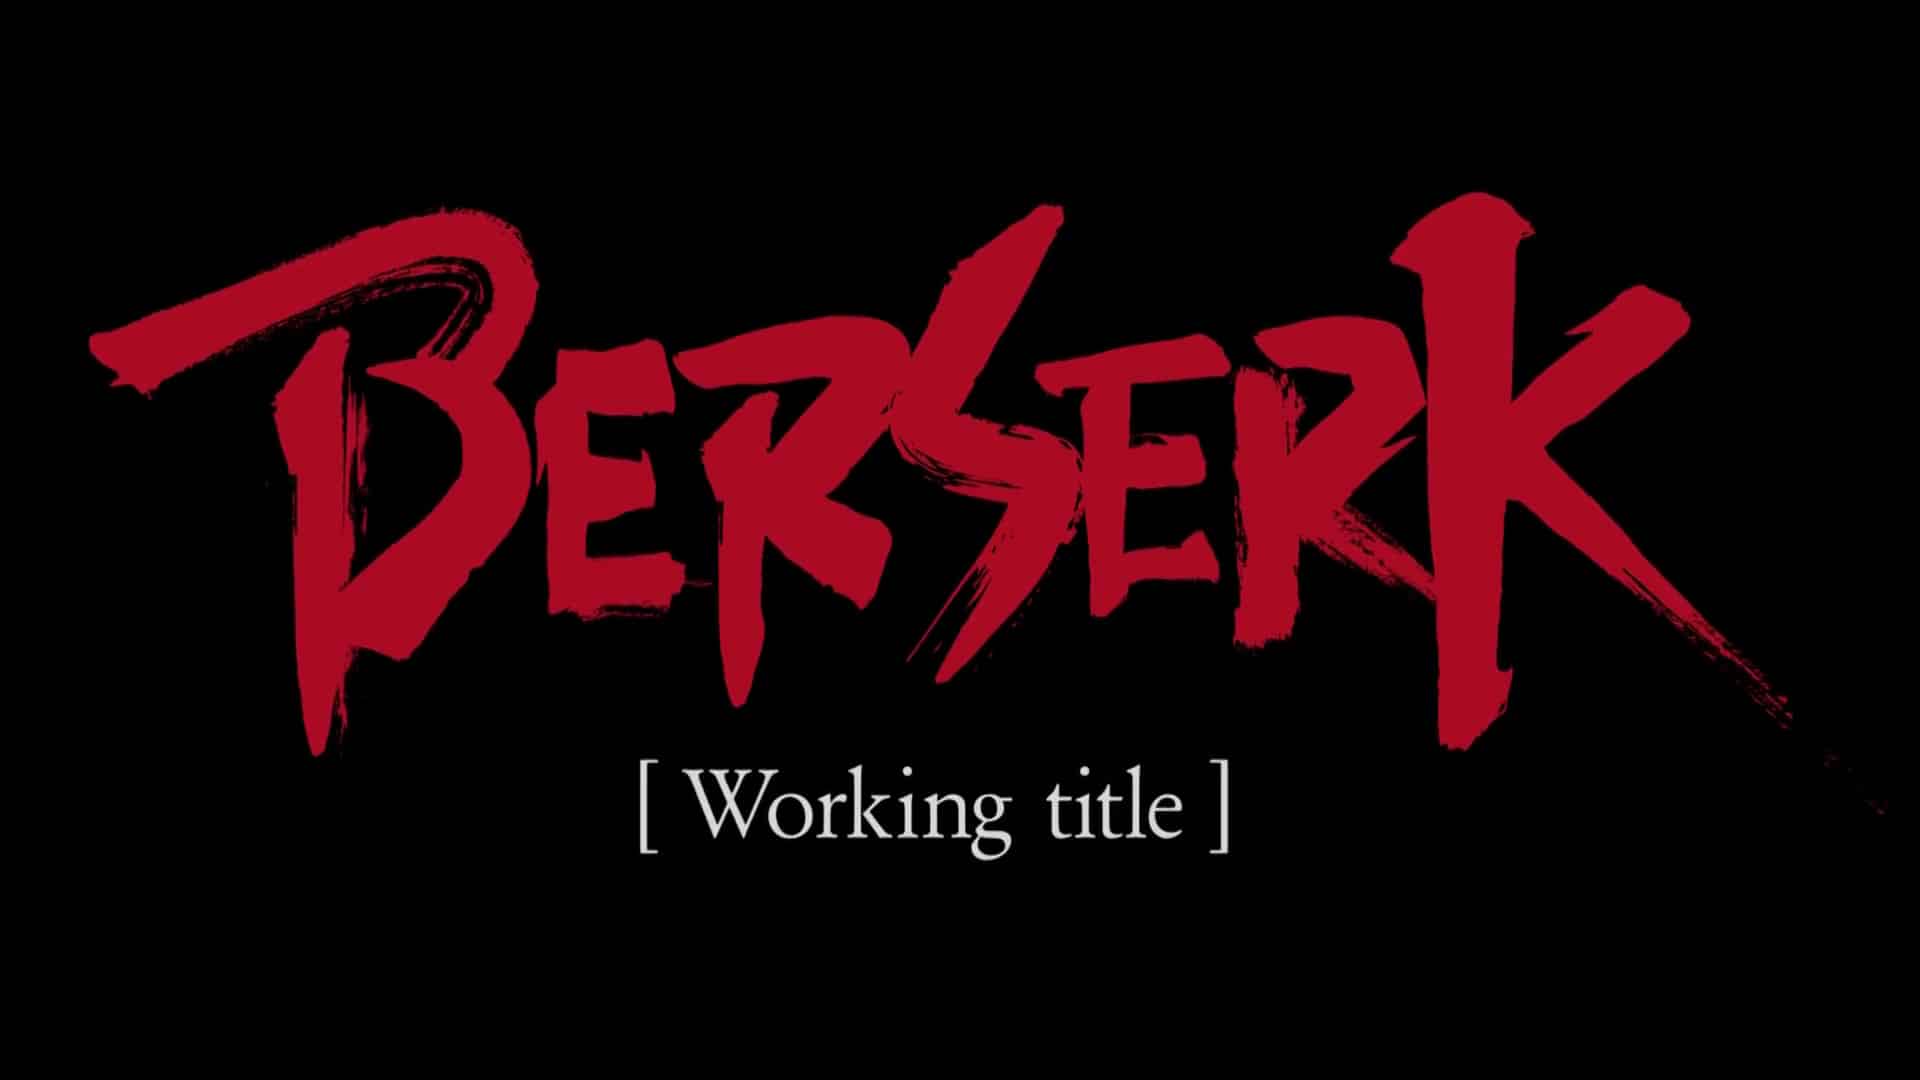 Berserk Warriors Logo